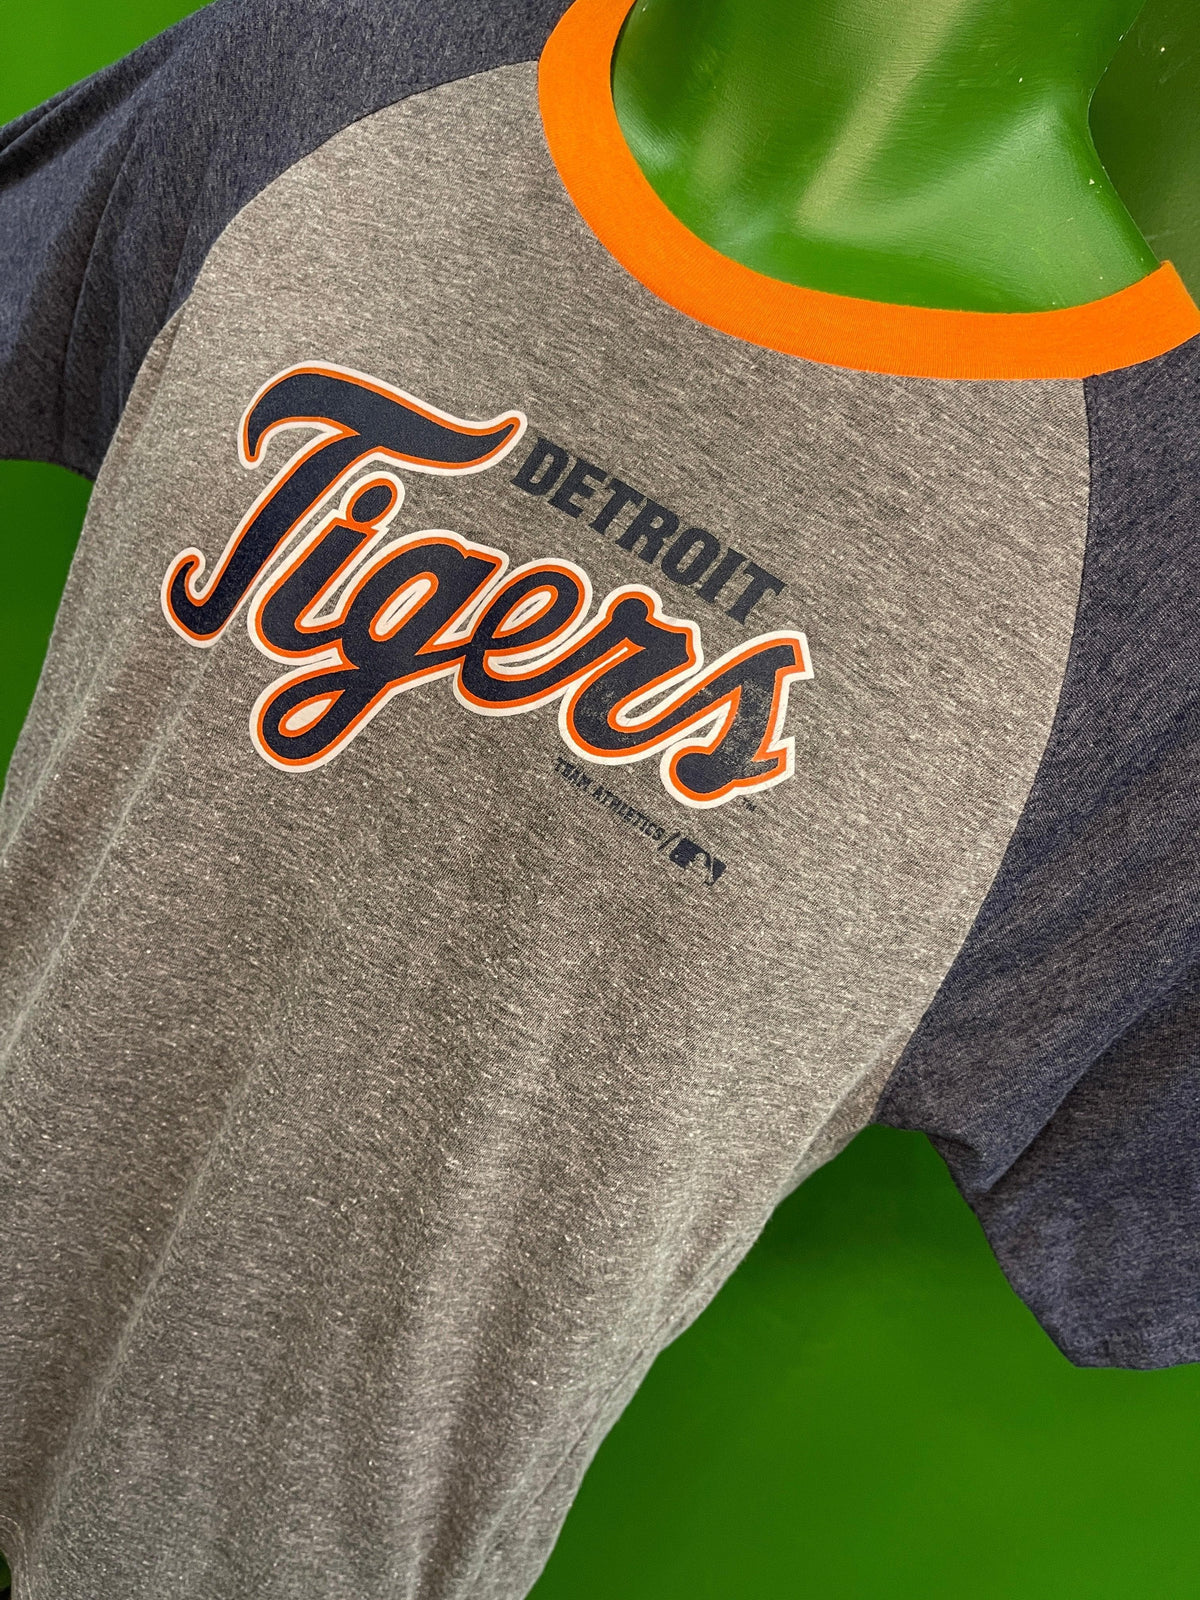 MLB Detroit Tigers Grey Colourblock T-Shirt Youth Large 12-14